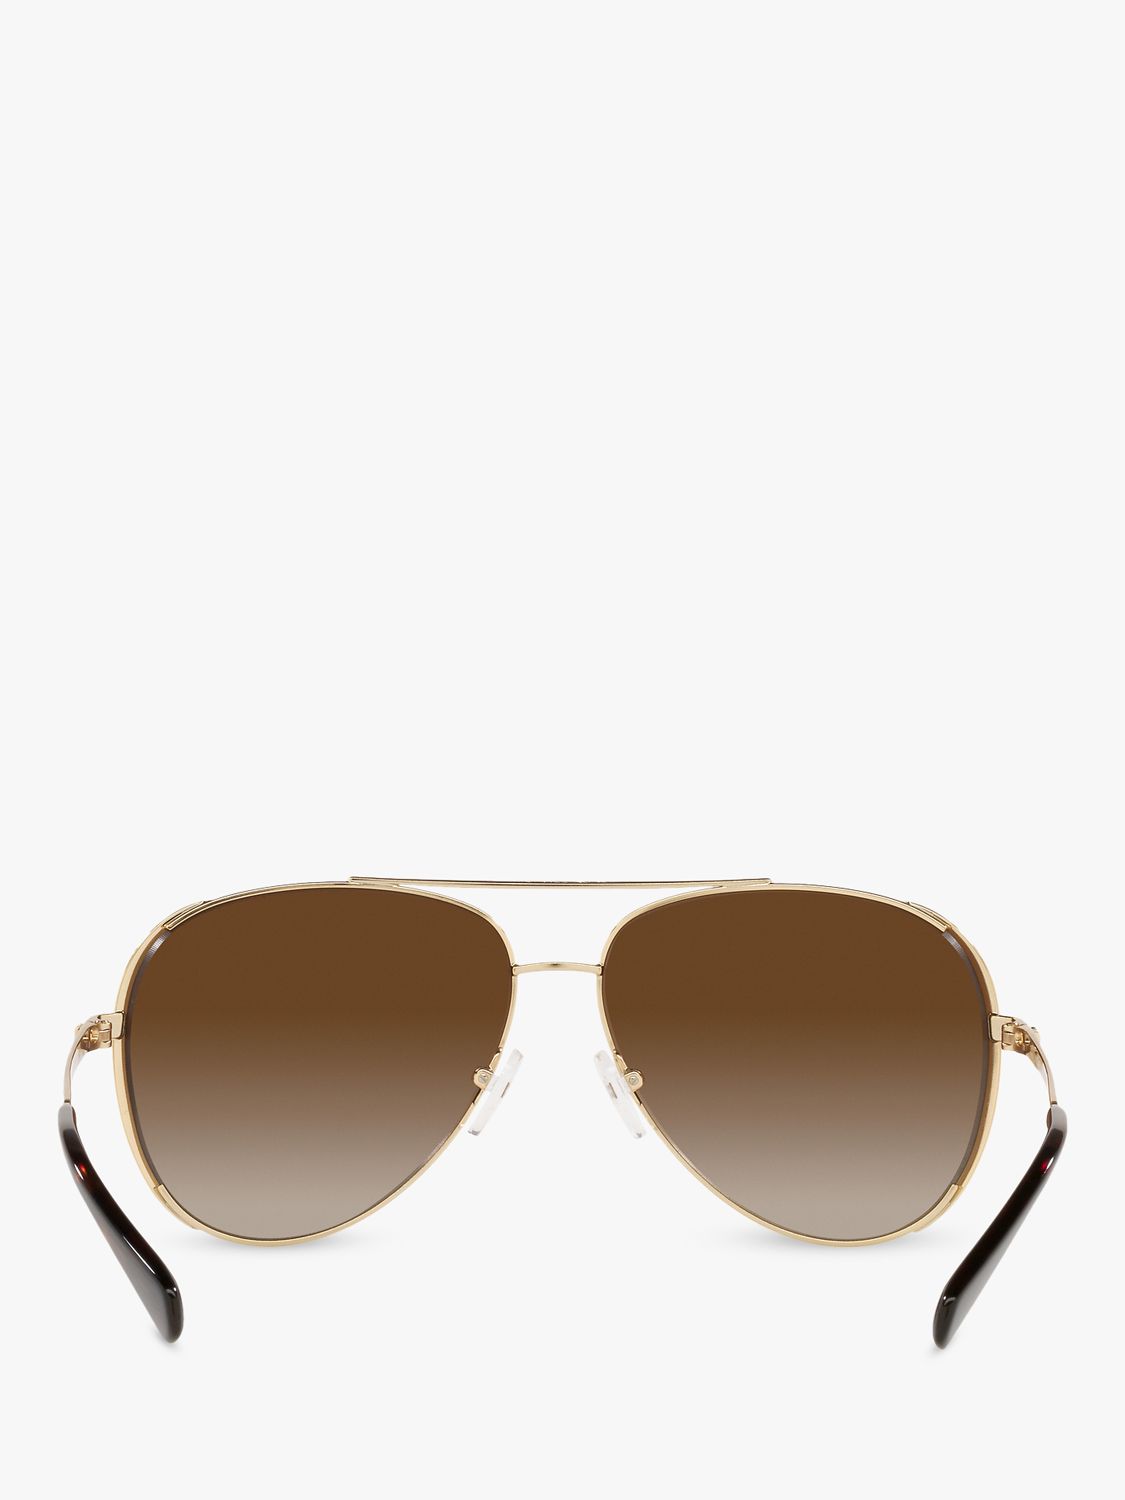 Michael Kors MK1101B Women's Chelsea Aviator Sunglasses, Gold/Brown ...